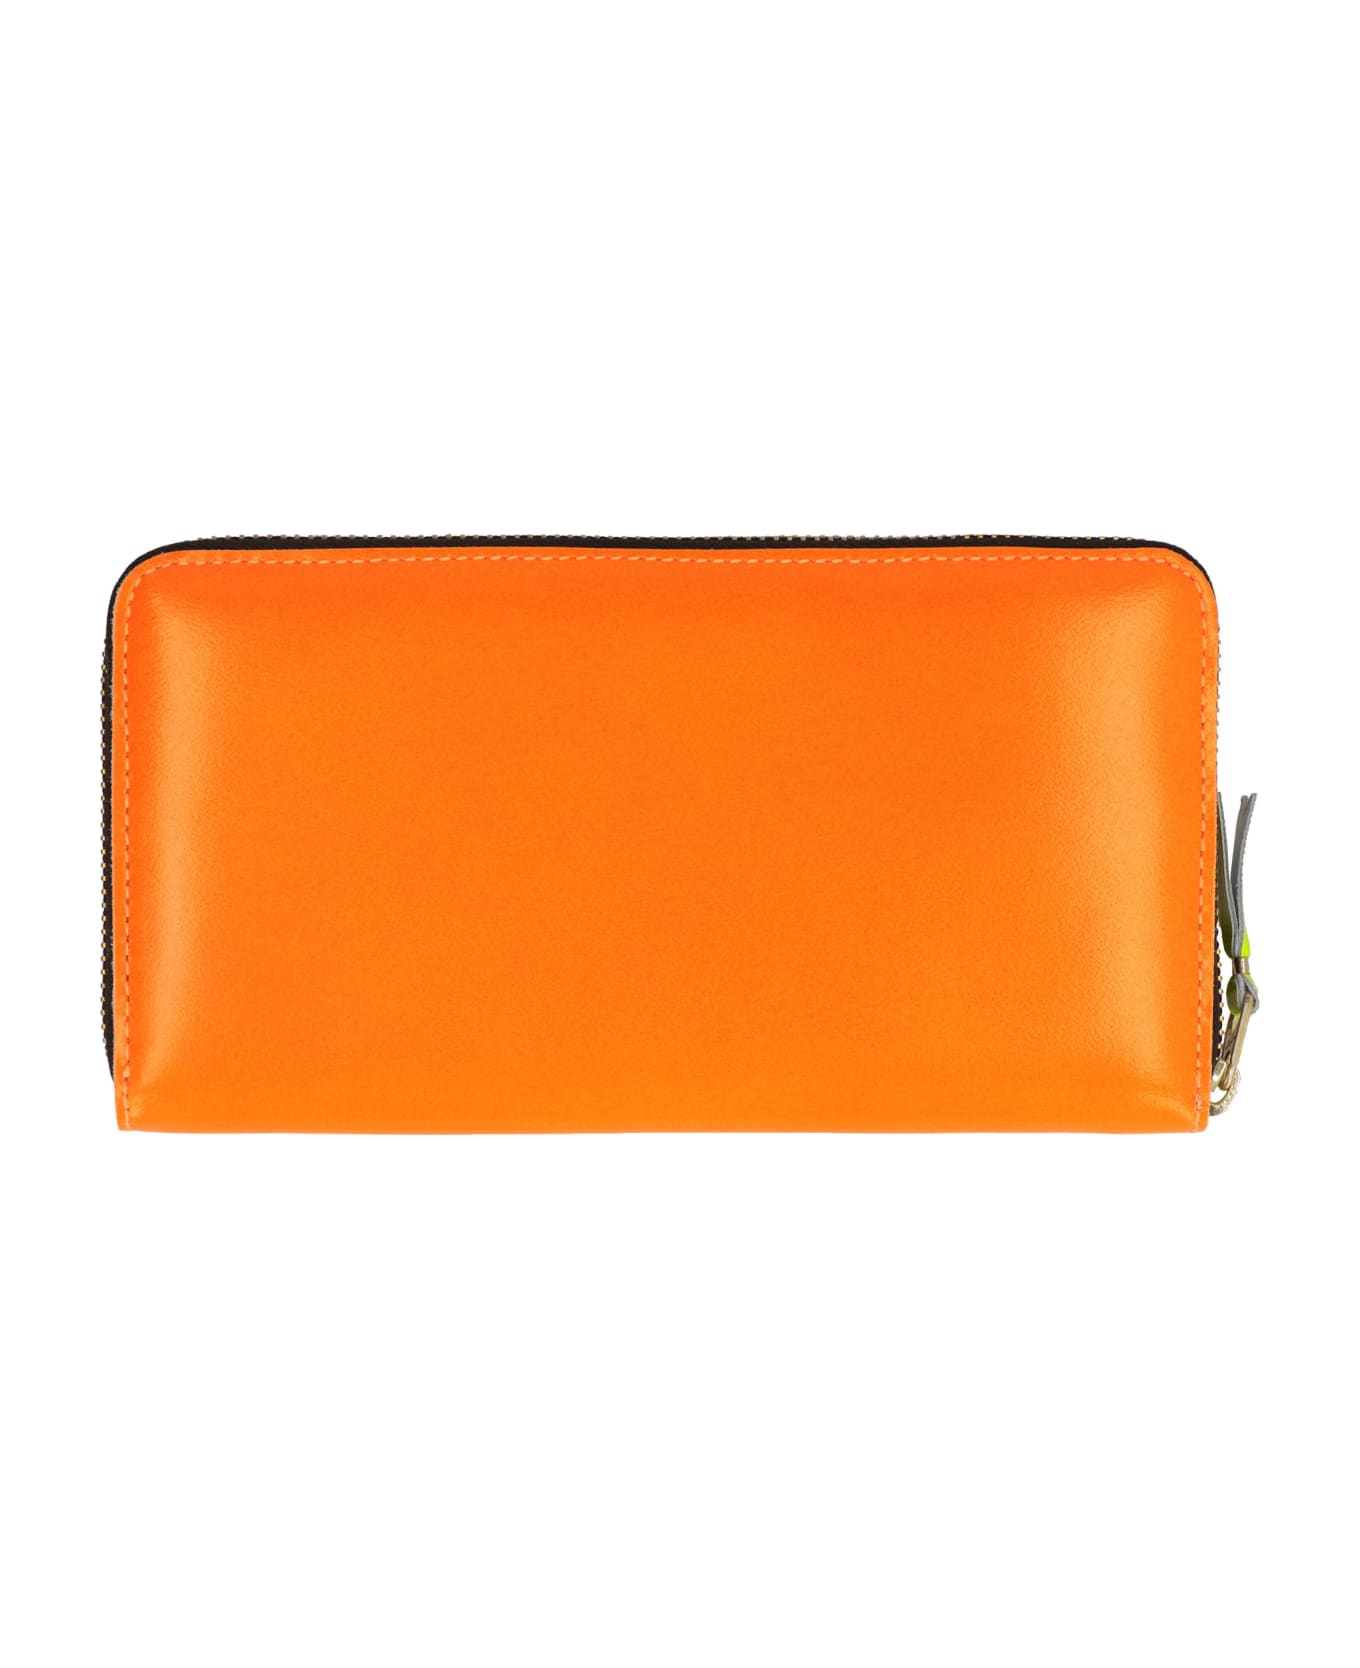 Comme des Garçons Wallet Leather Zip Around Wallet - Orange 財布